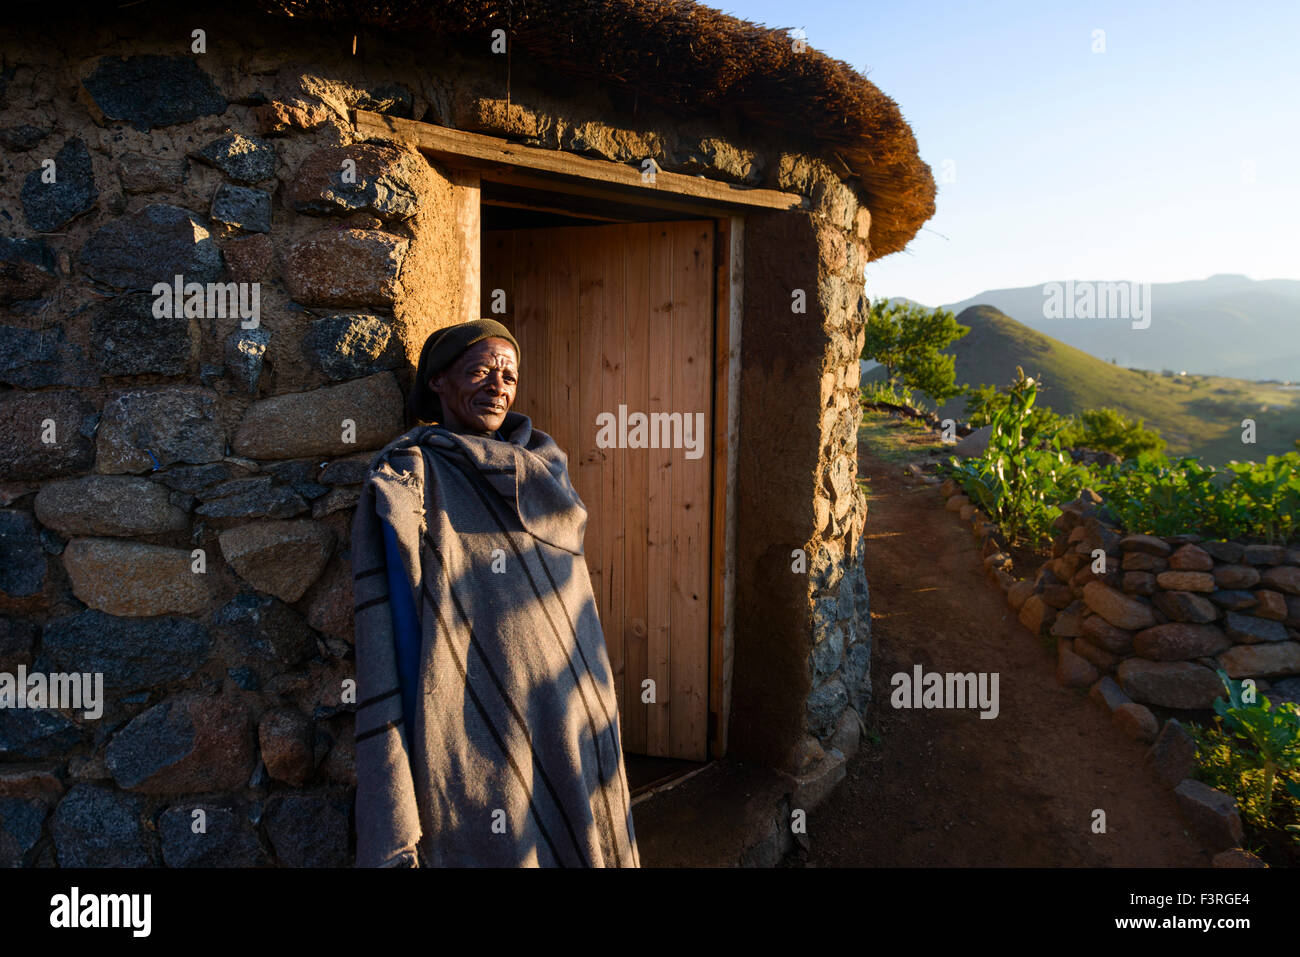 Basotho-Hirte in traditionellen Behausung, Lesotho, Afrika Stockfoto